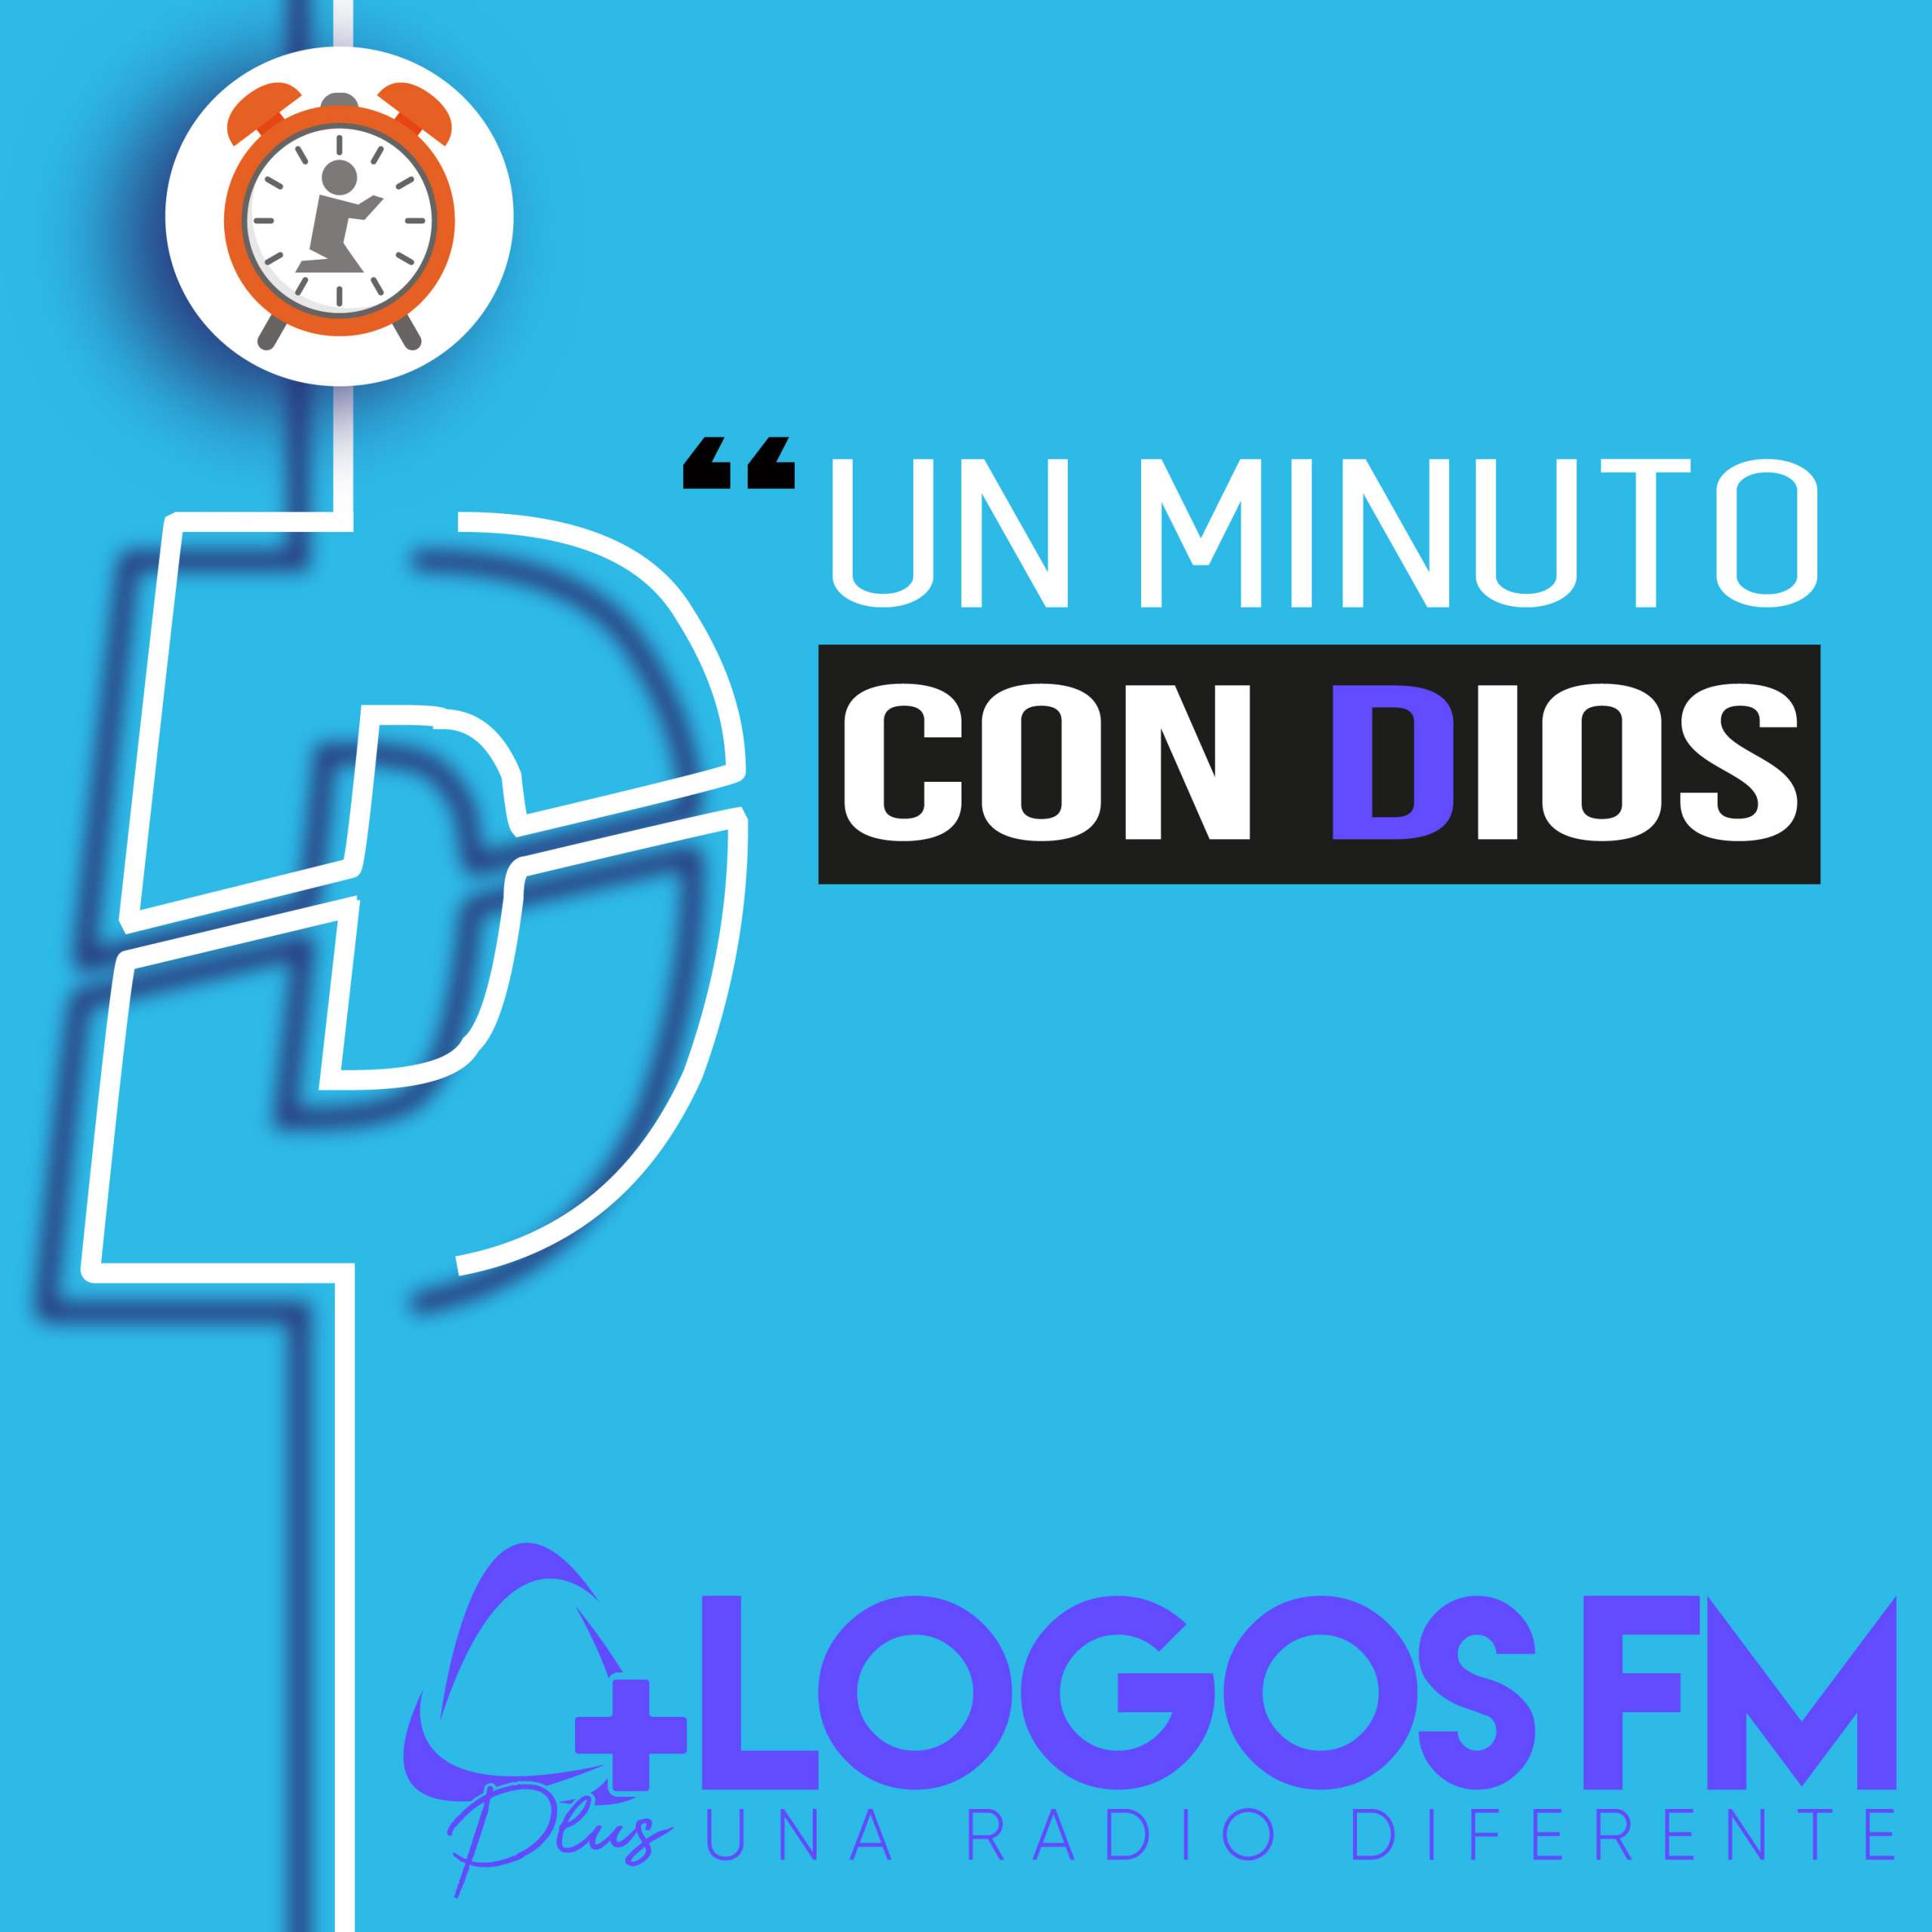 Un minuto con Dios - Episodio 388 - Loida Vargas